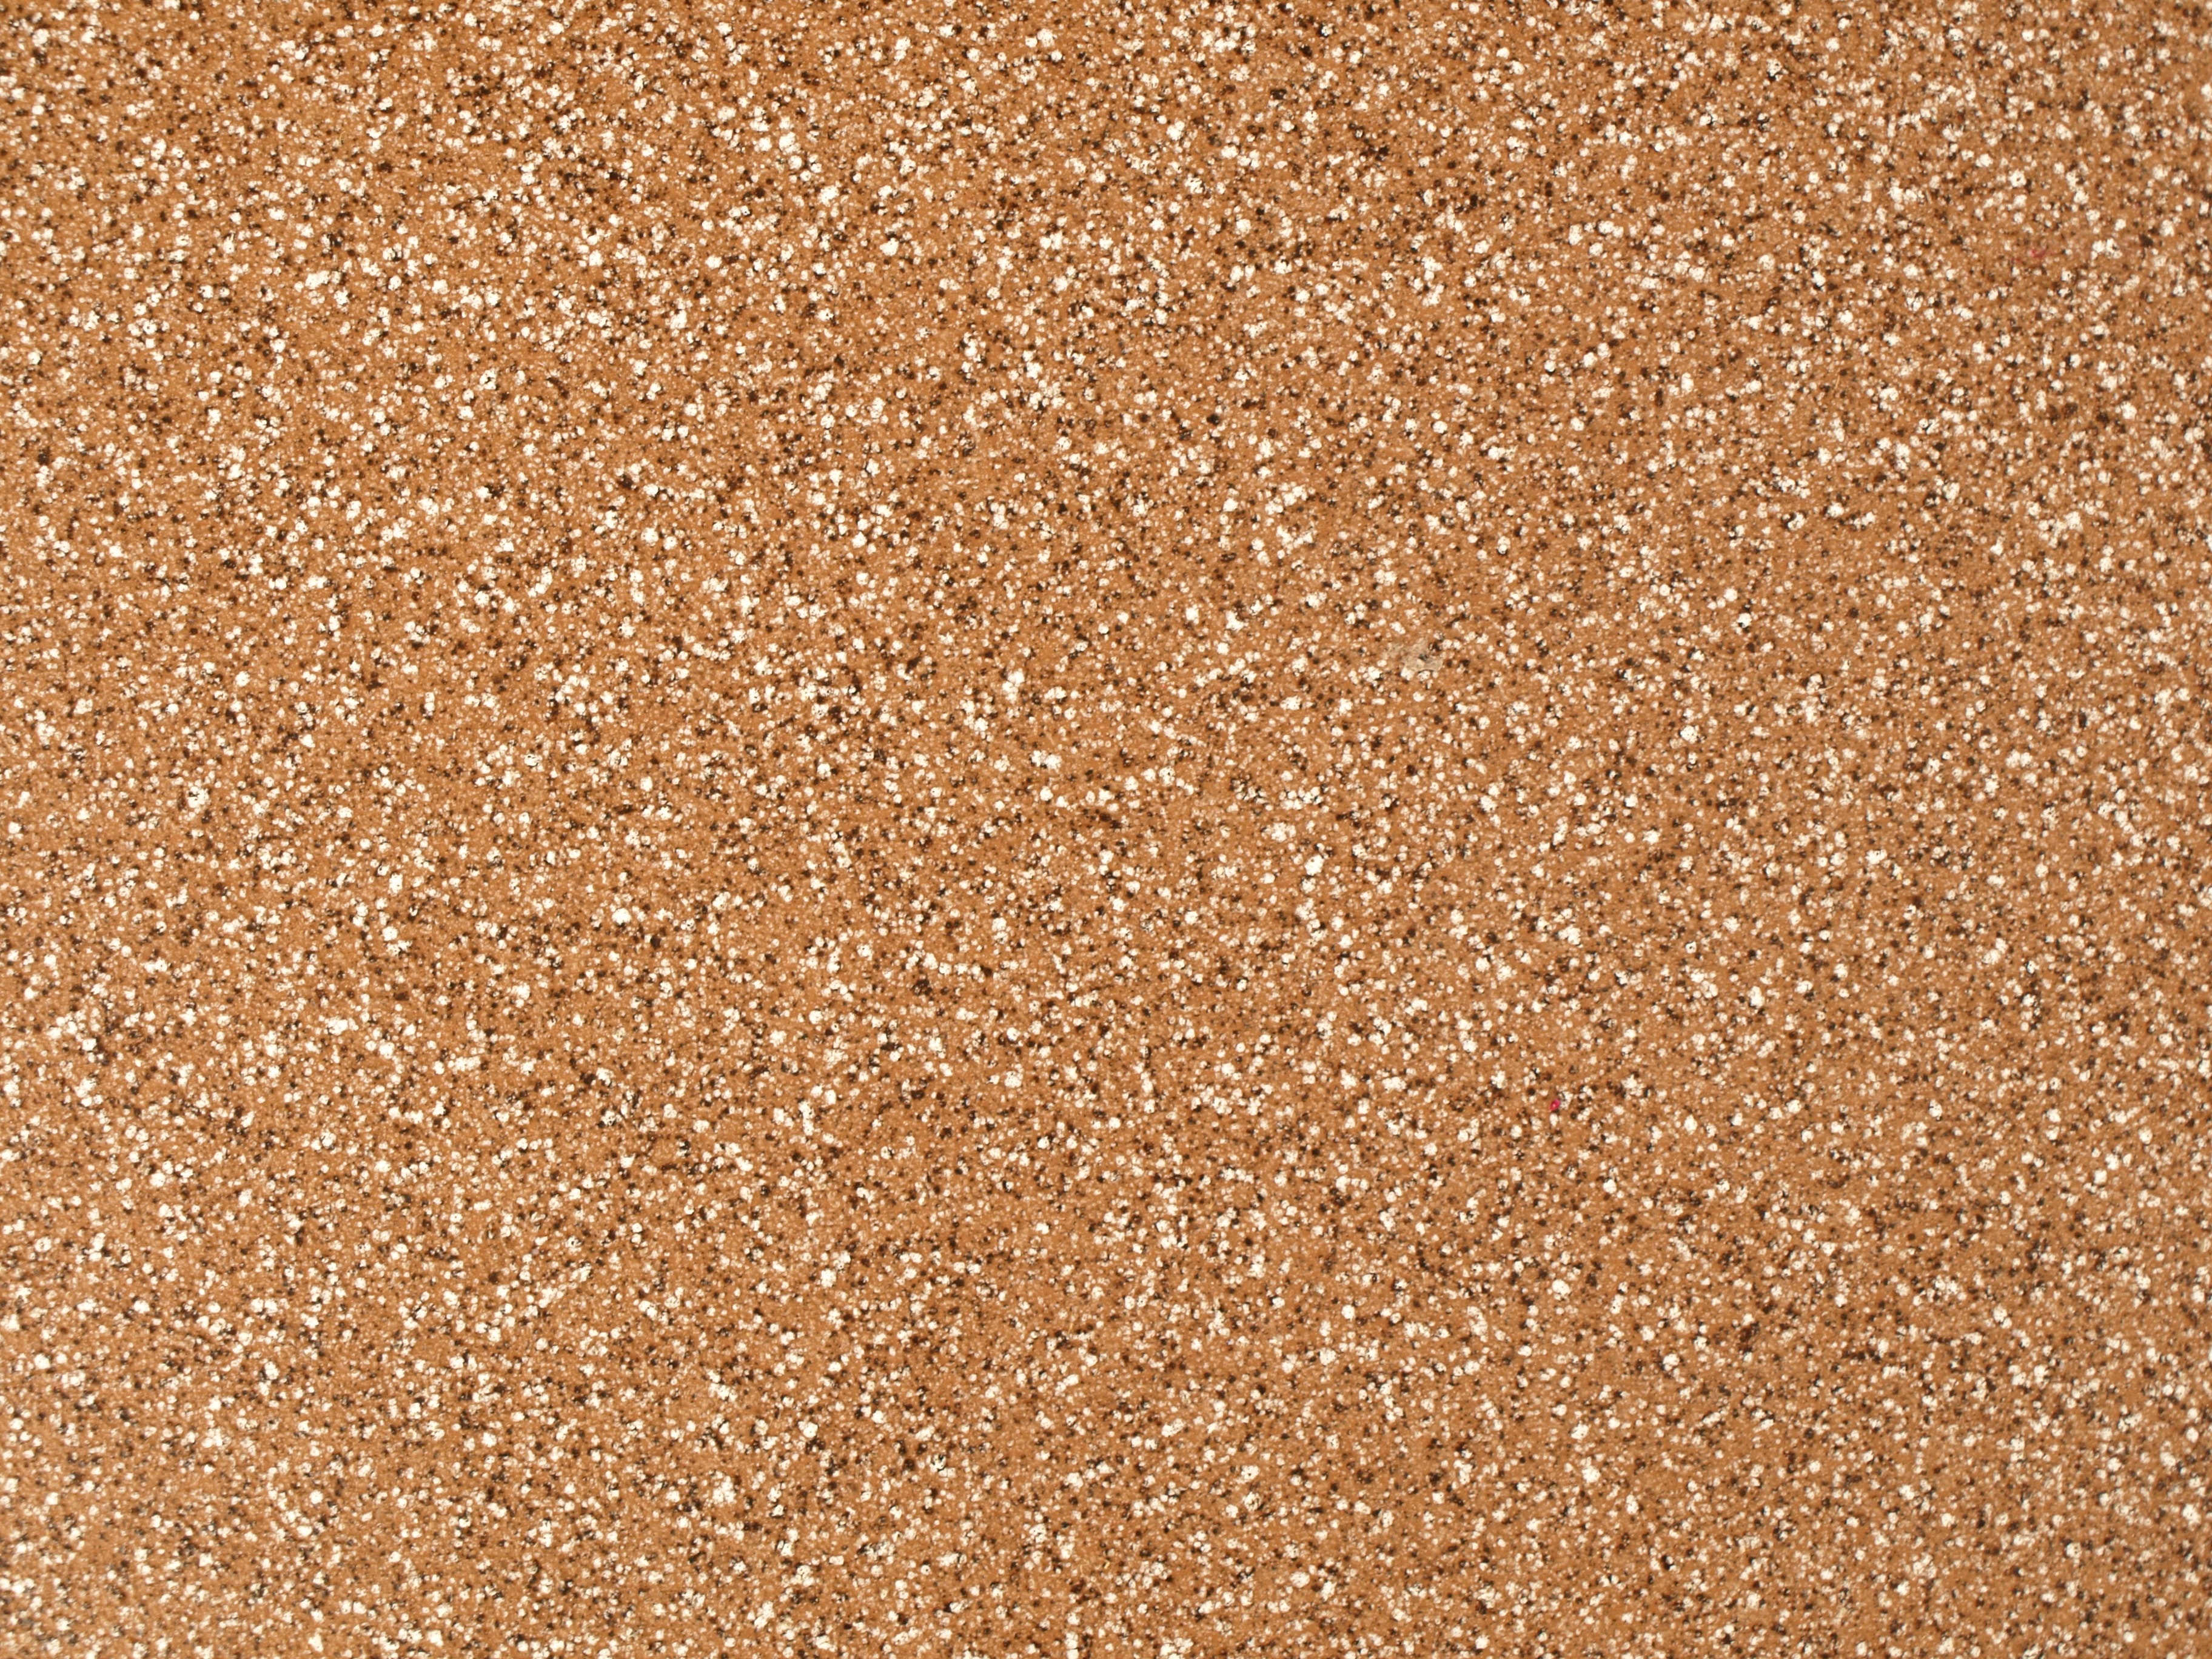 Sand photo